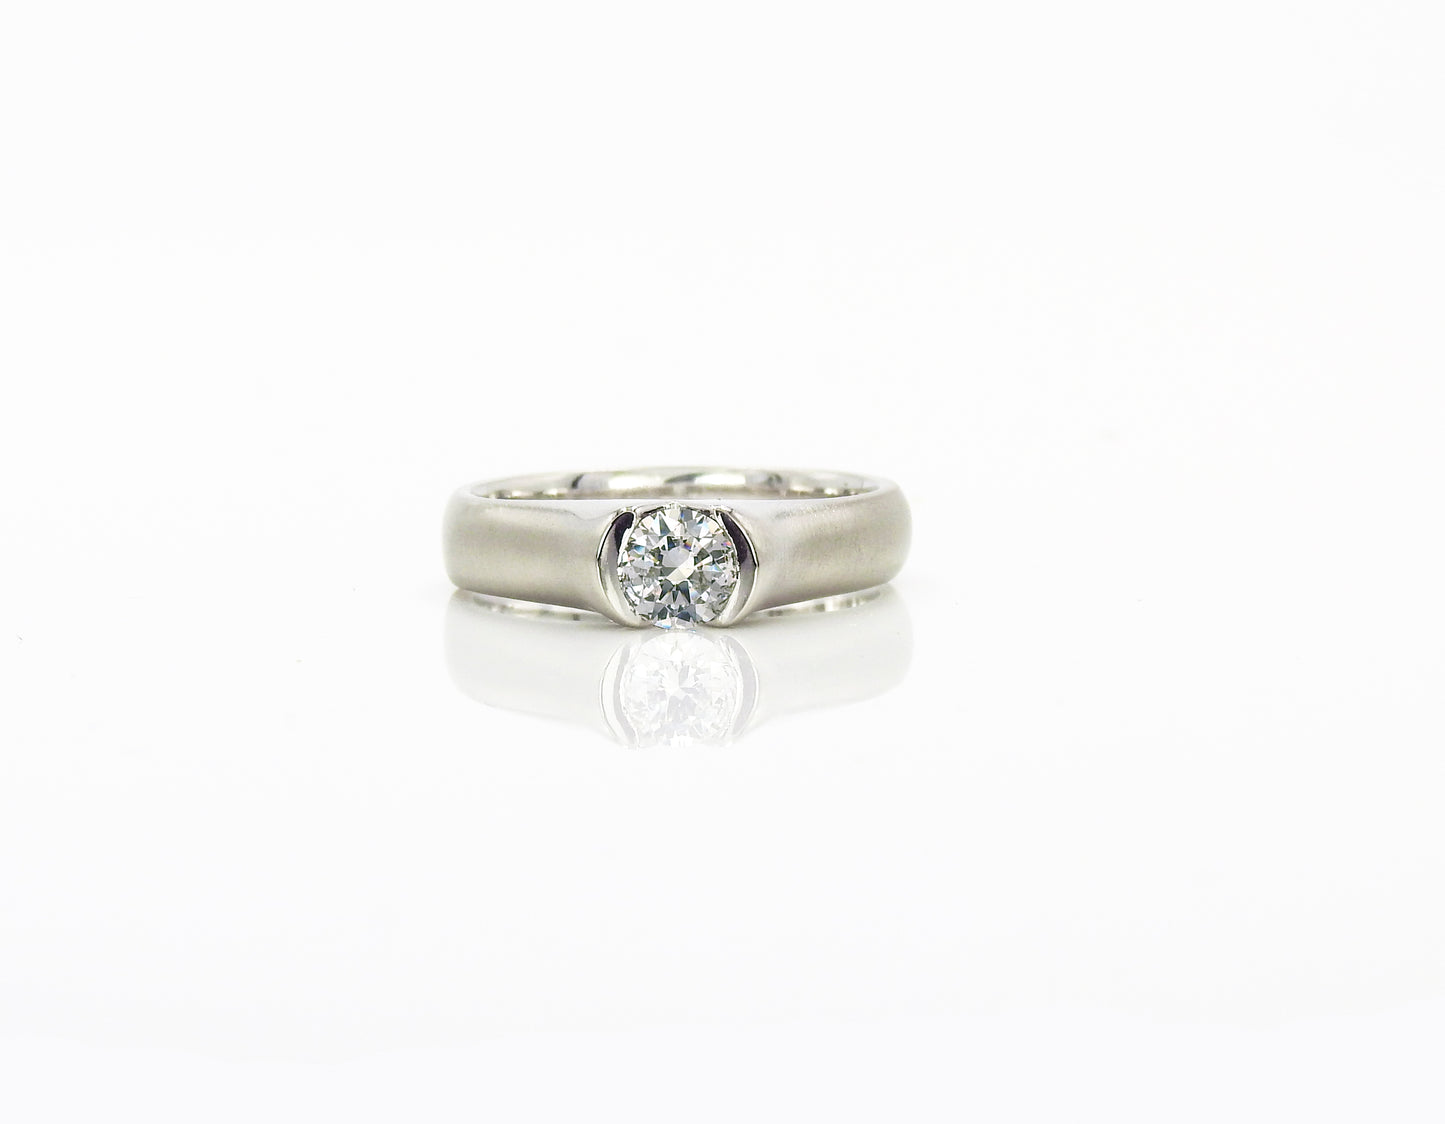 Diamond rings by ZEALmetal, Nicole Horlor, in Kingston, ON, Canada